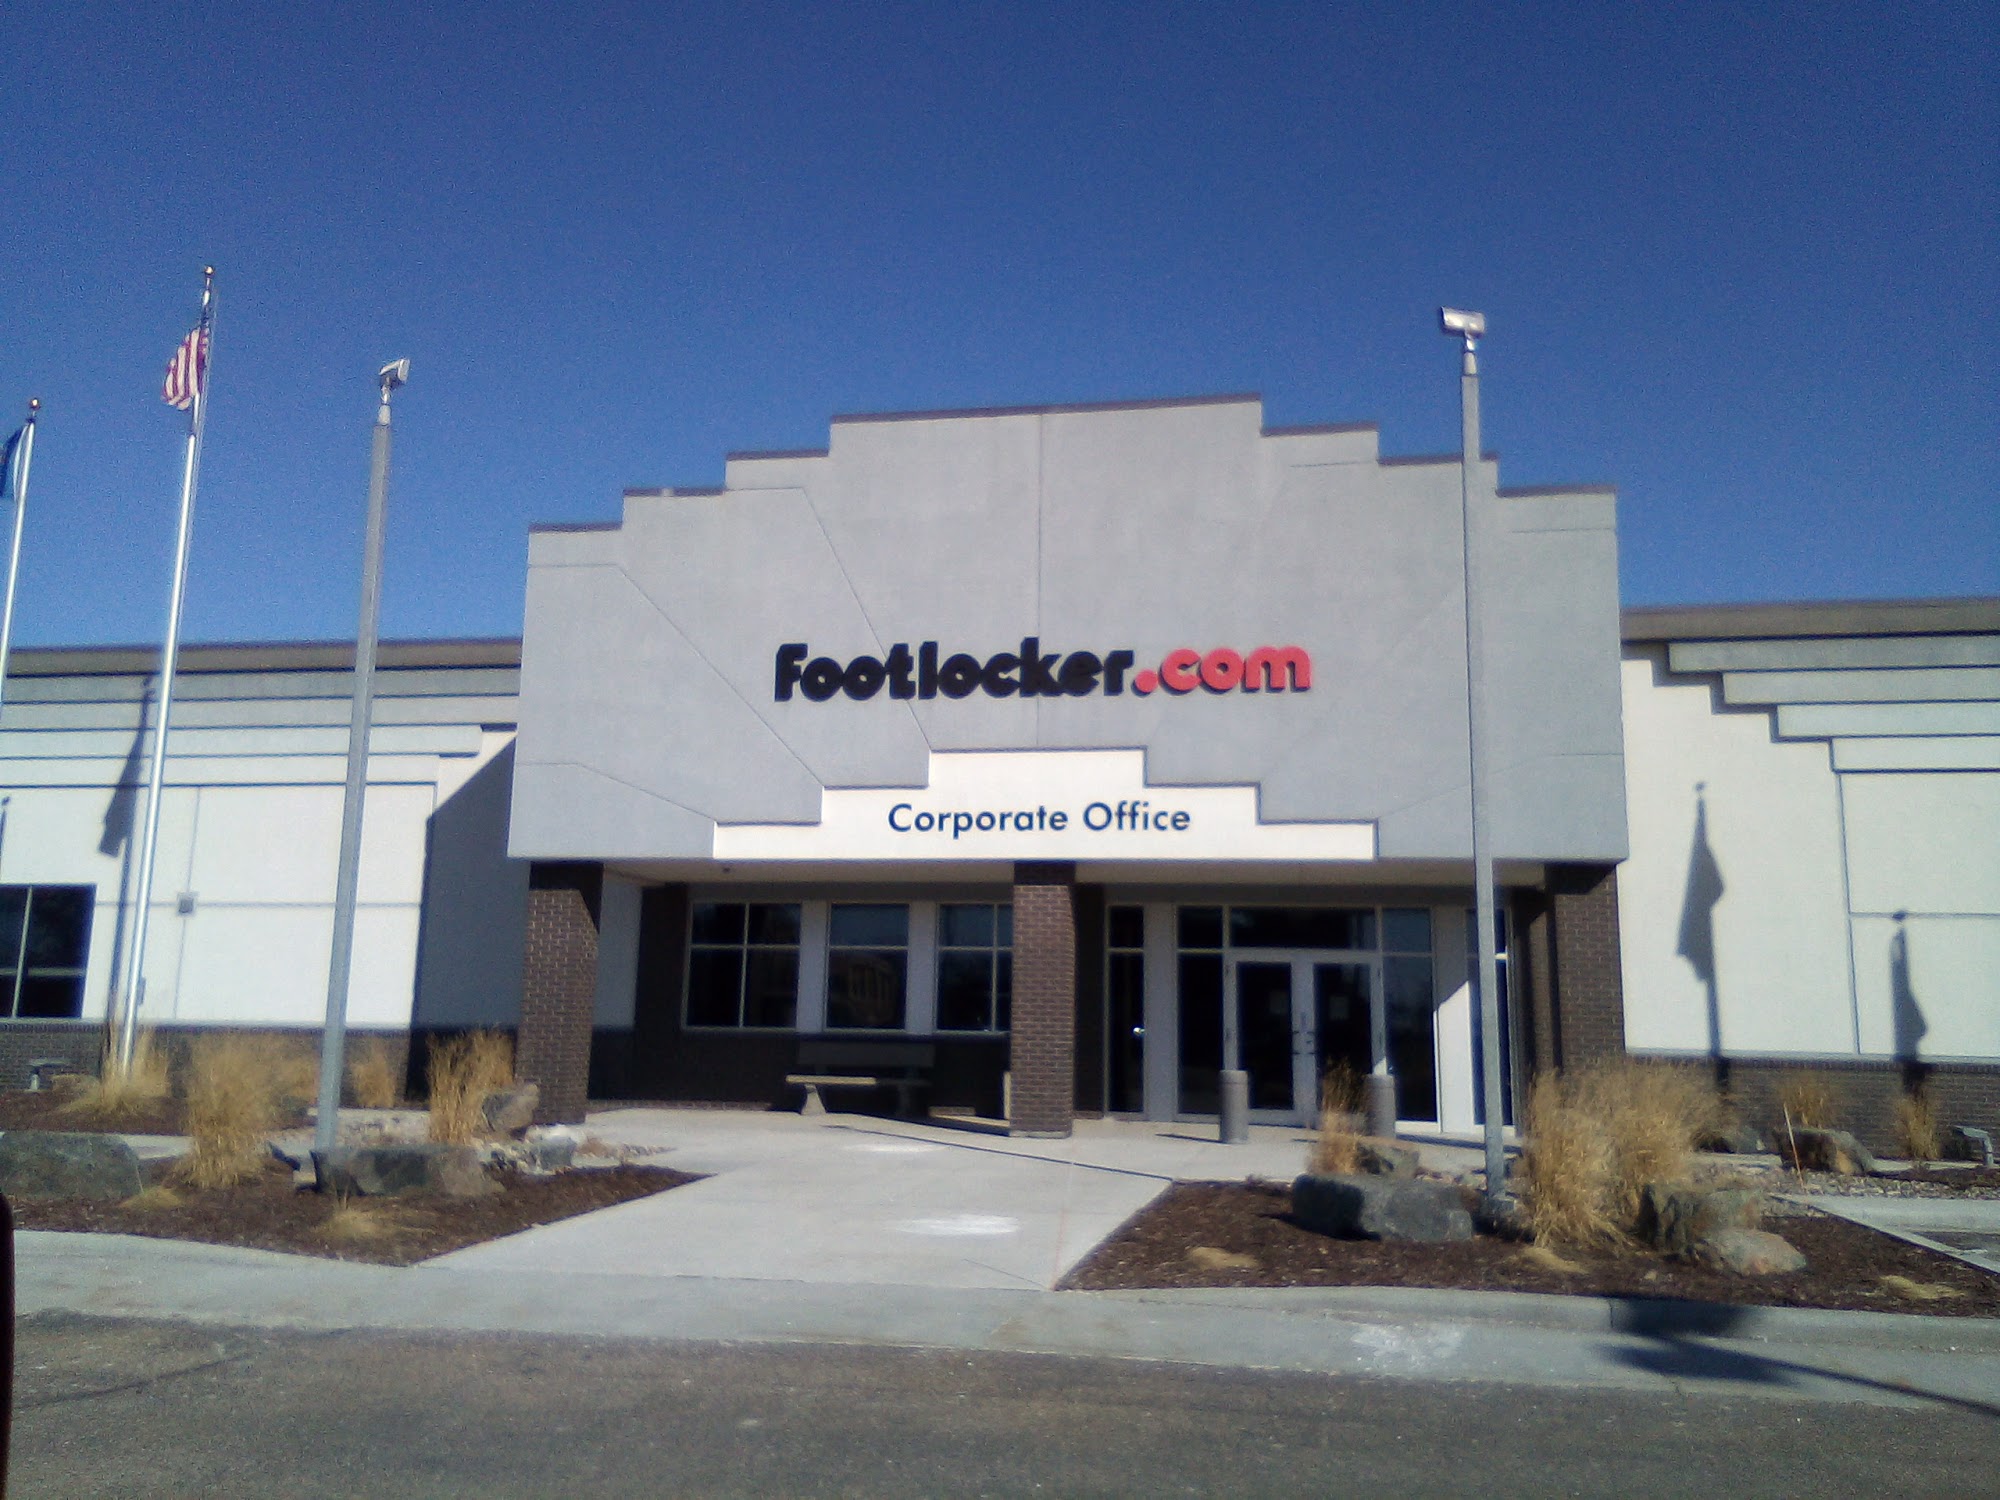 FootLocker.com Corporate Headquarters